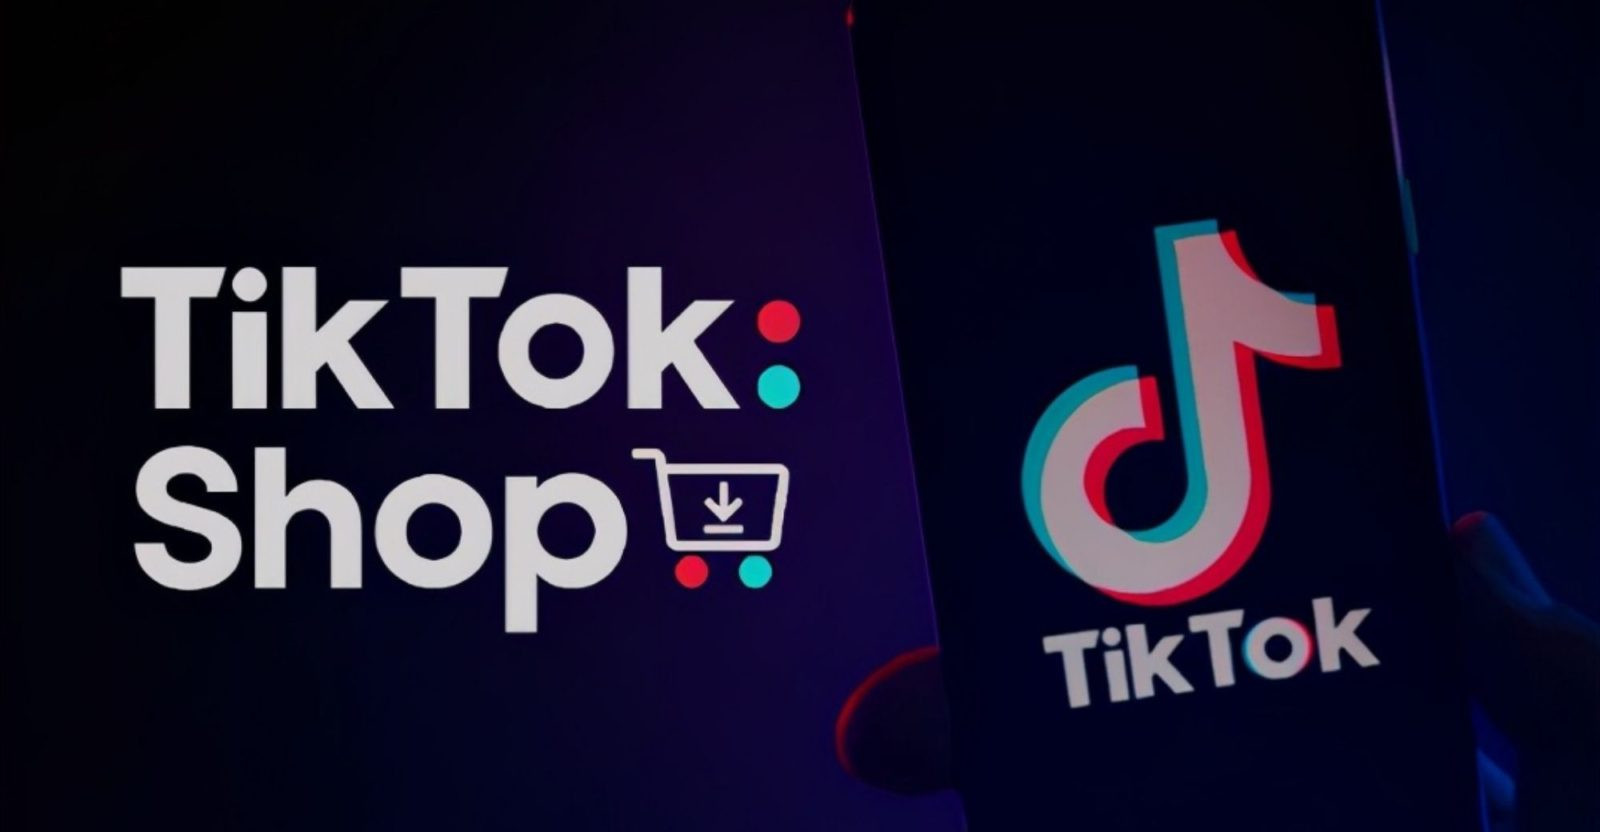 [Tiktok Shop] - Hướng dẫn link tài khoản Tiktok cá nhân với Tiktok Shop